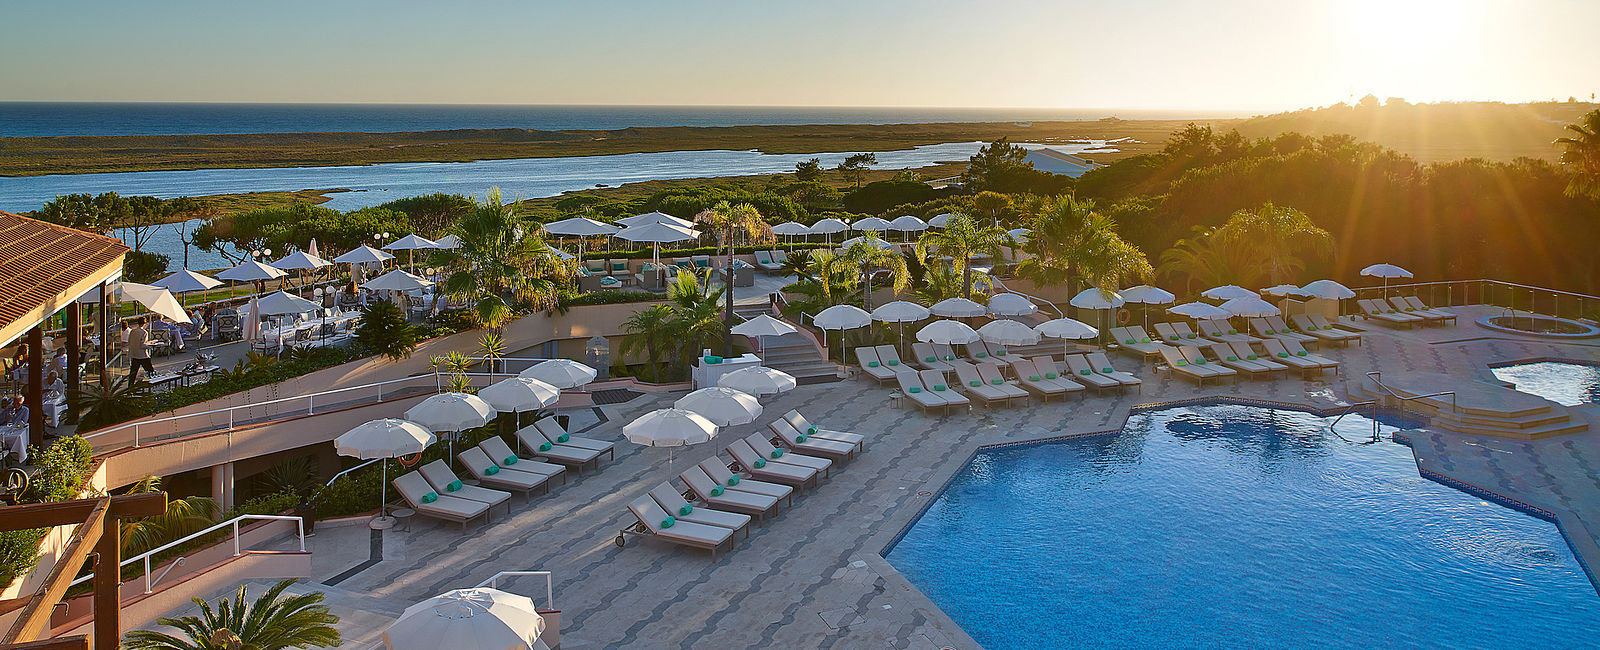 HOTELTEST
 Quinta do Lago 
 Luxuriöser Golfklassiker 